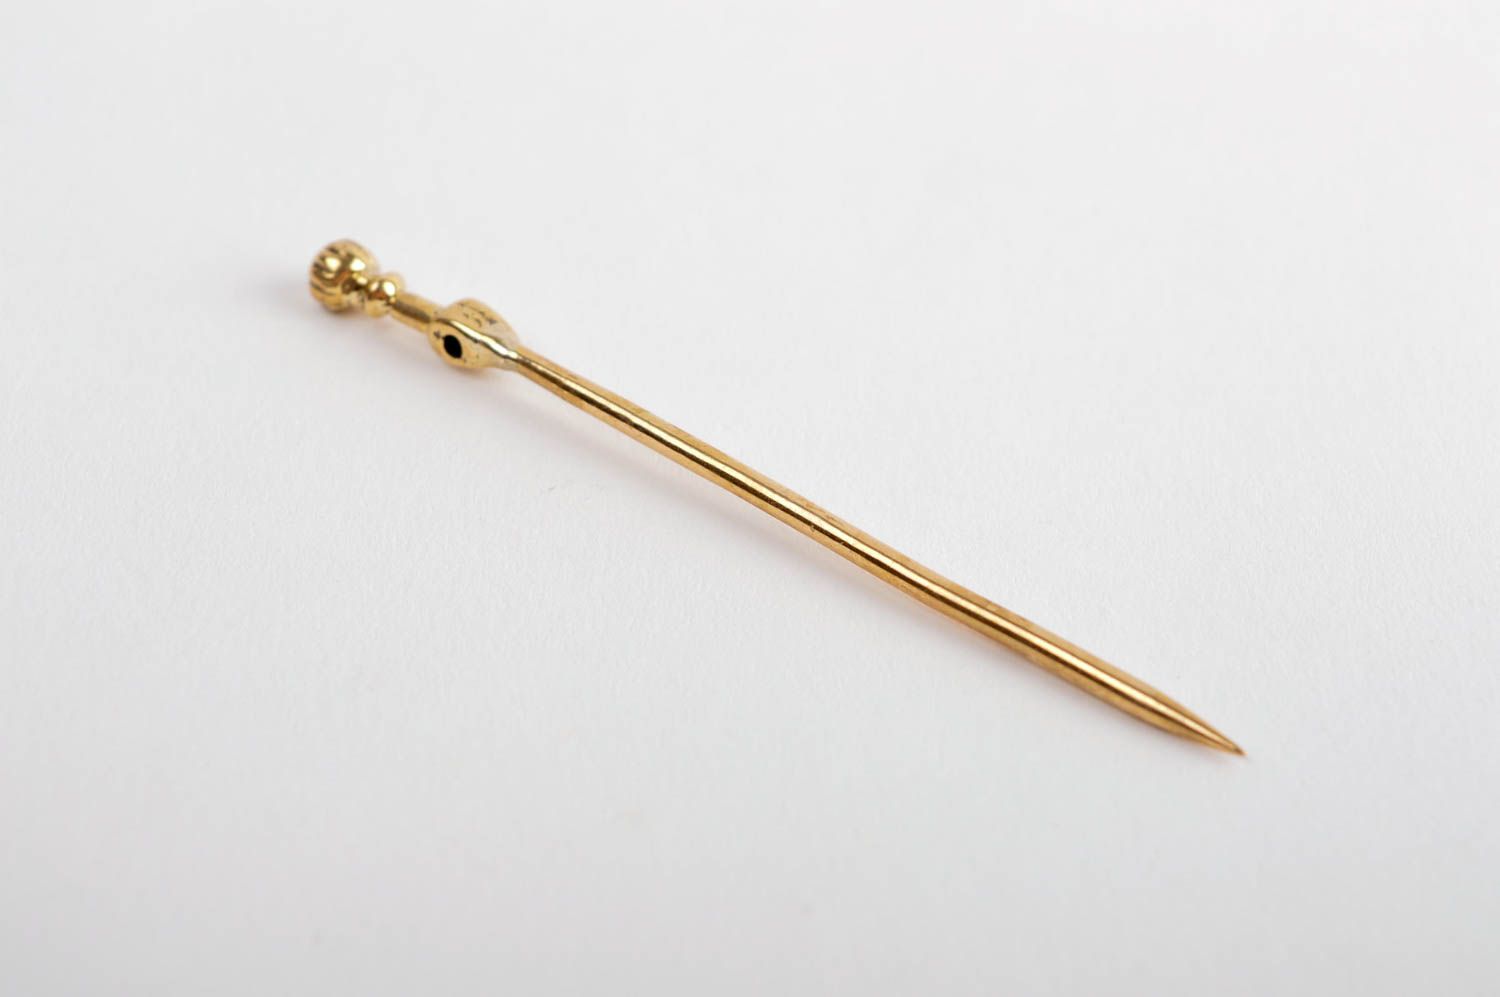 Hair chopstick metal jewelry handmade hair accessories hair pins gifts for women photo 2